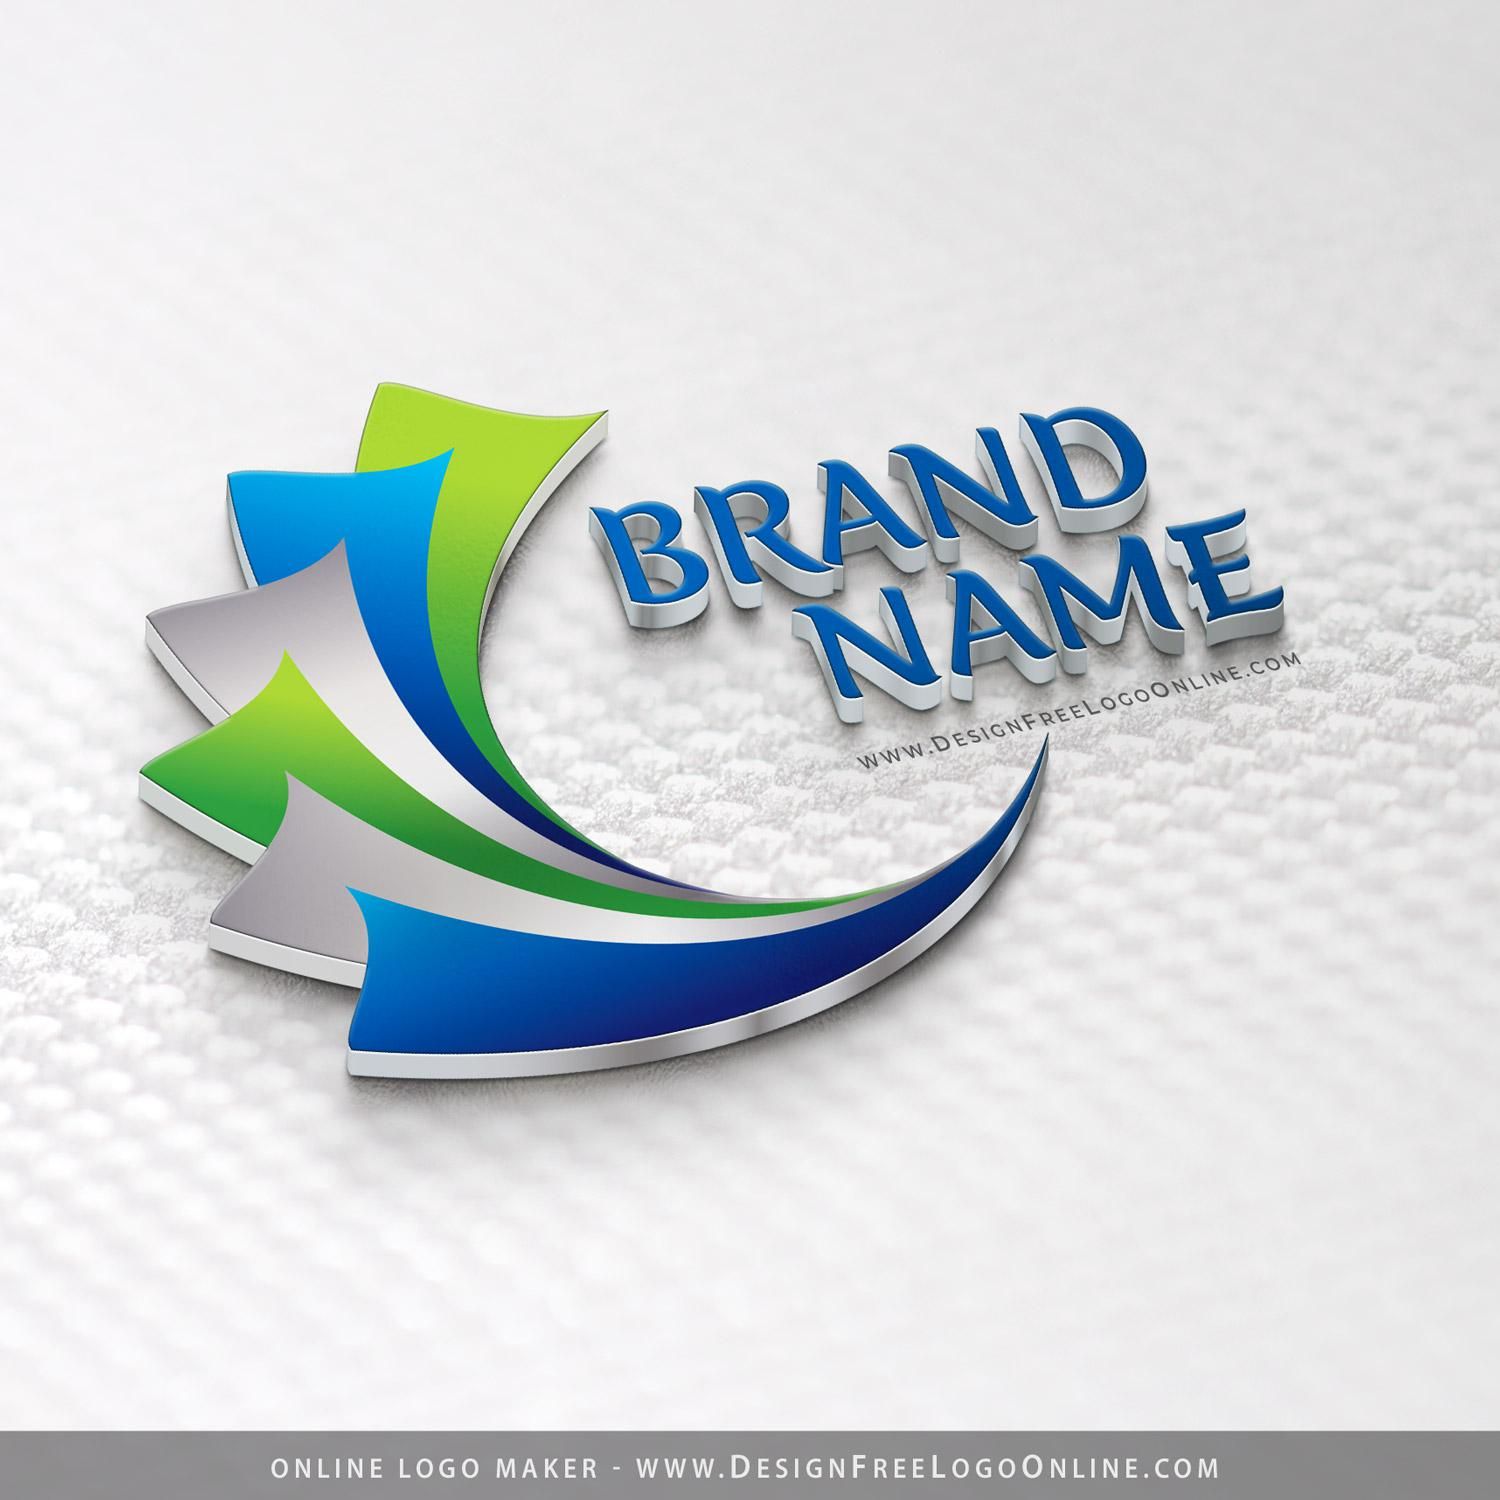 Create a logo brand online